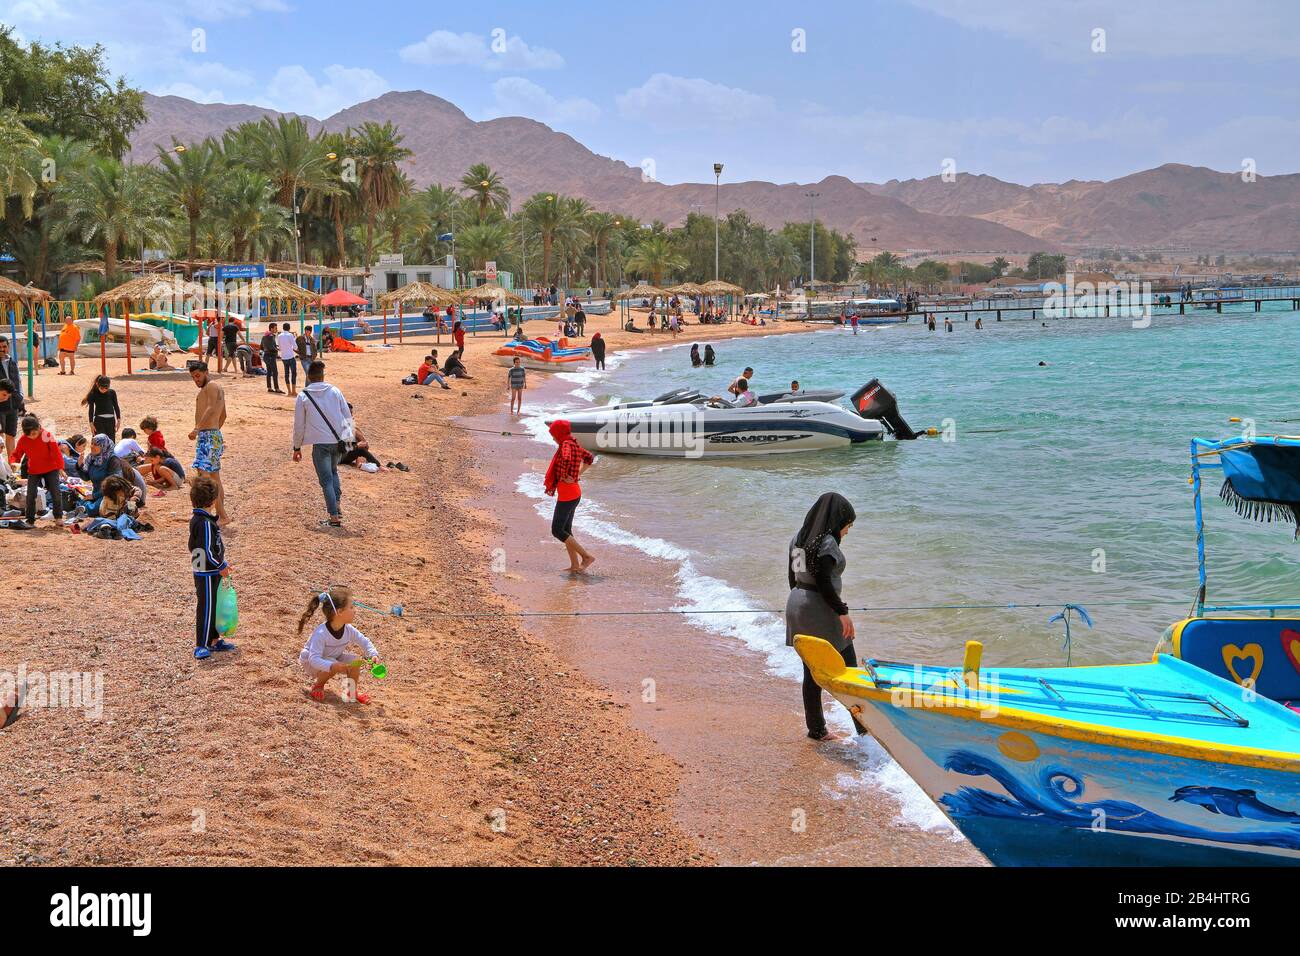 Les habitants de la plage de la ville d'Aqaba Aqaba, Golfe d'Aqaba, Mer Rouge, Jordanie Banque D'Images